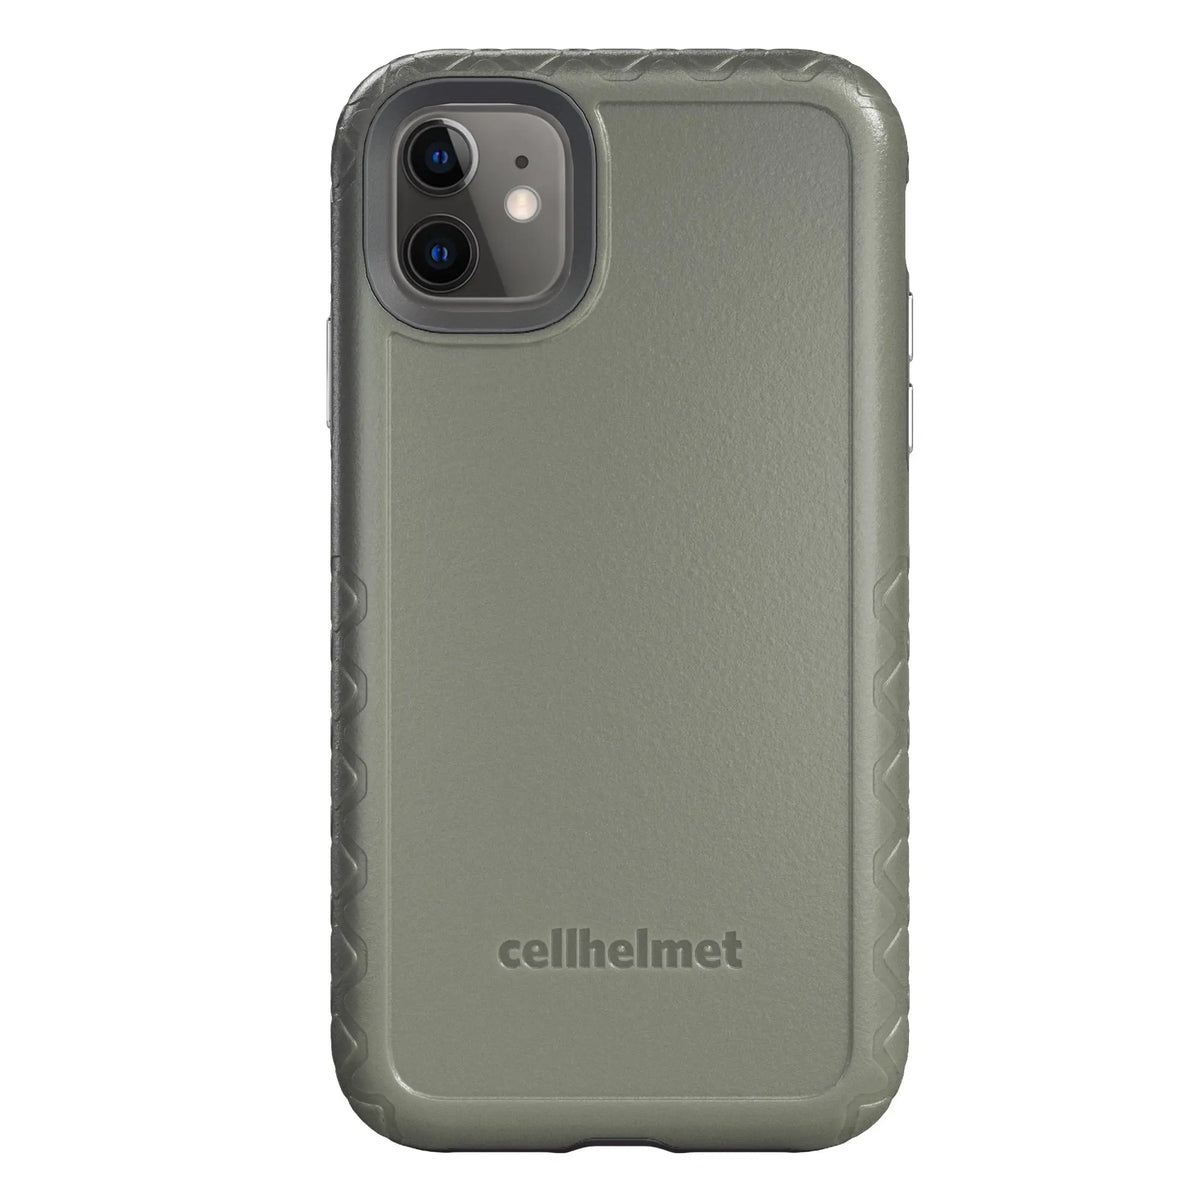 Green cellhelmet Customizable Case for iPhone 11